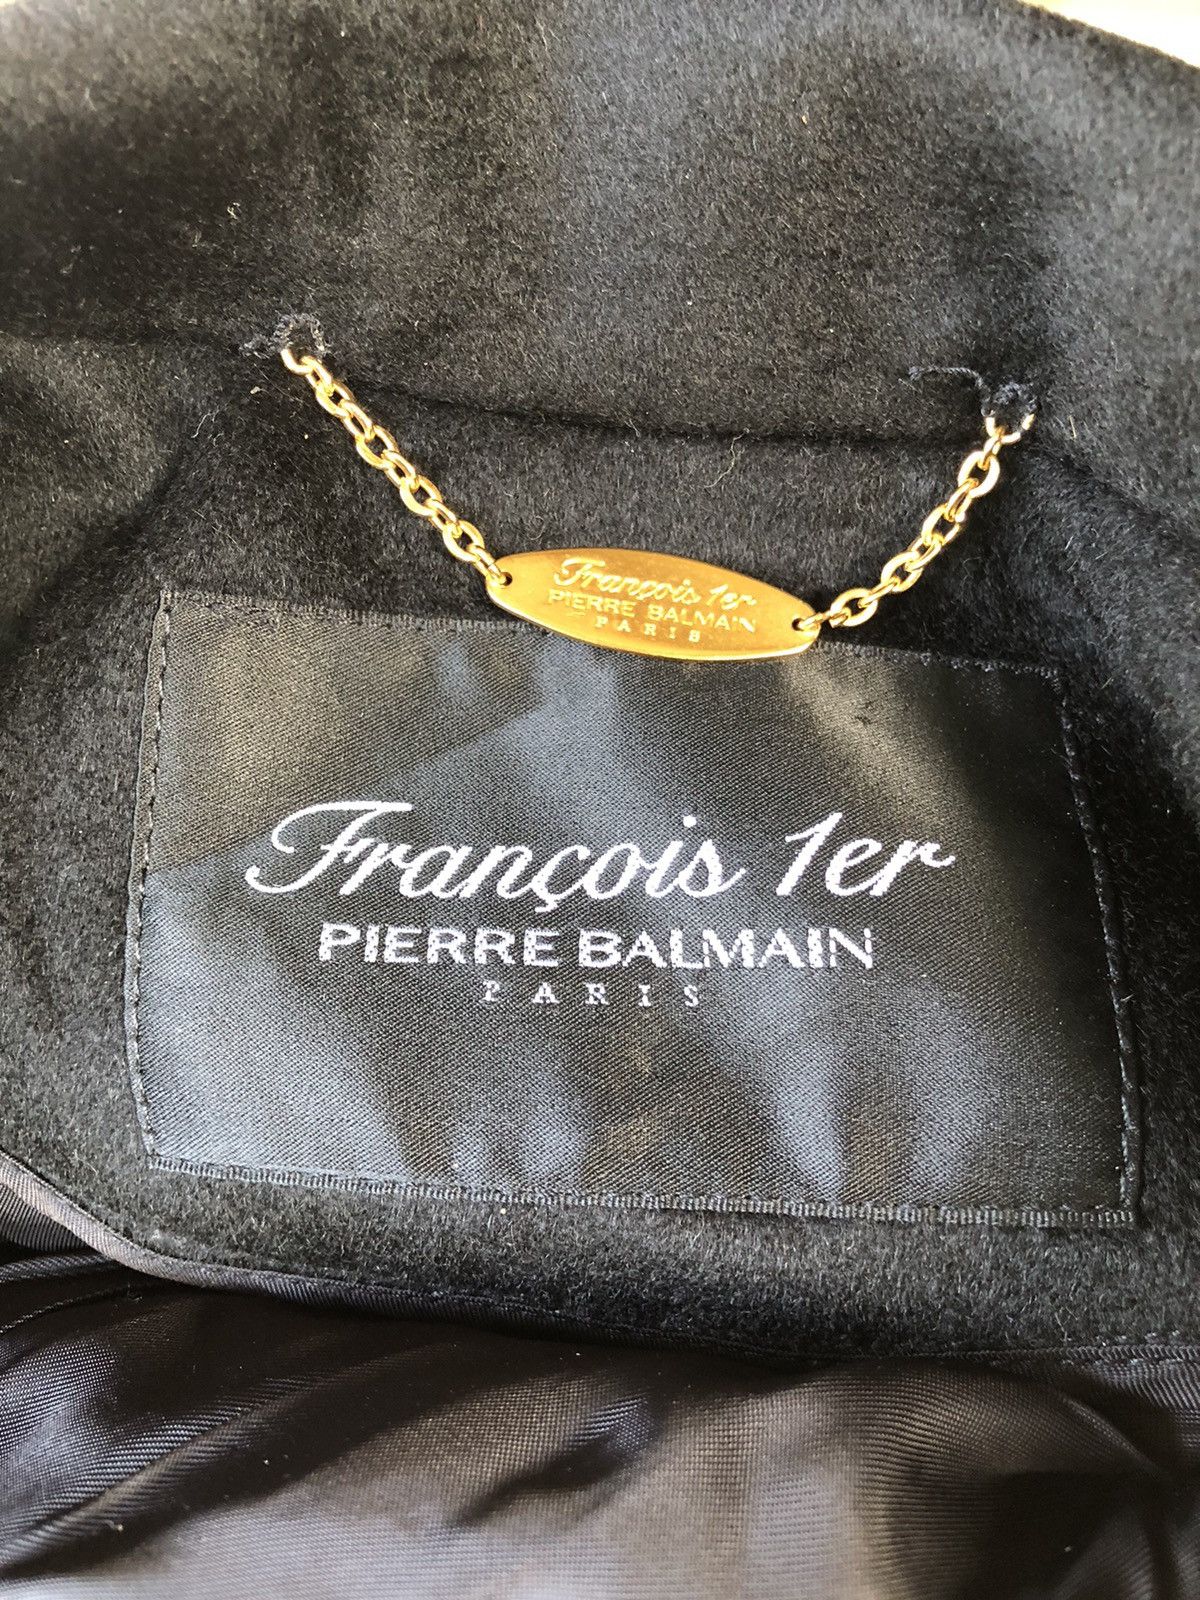 Vintage - PIERE BALMAIN FRANCOIS 1er WOMAN NEW WOOL COAT - 6